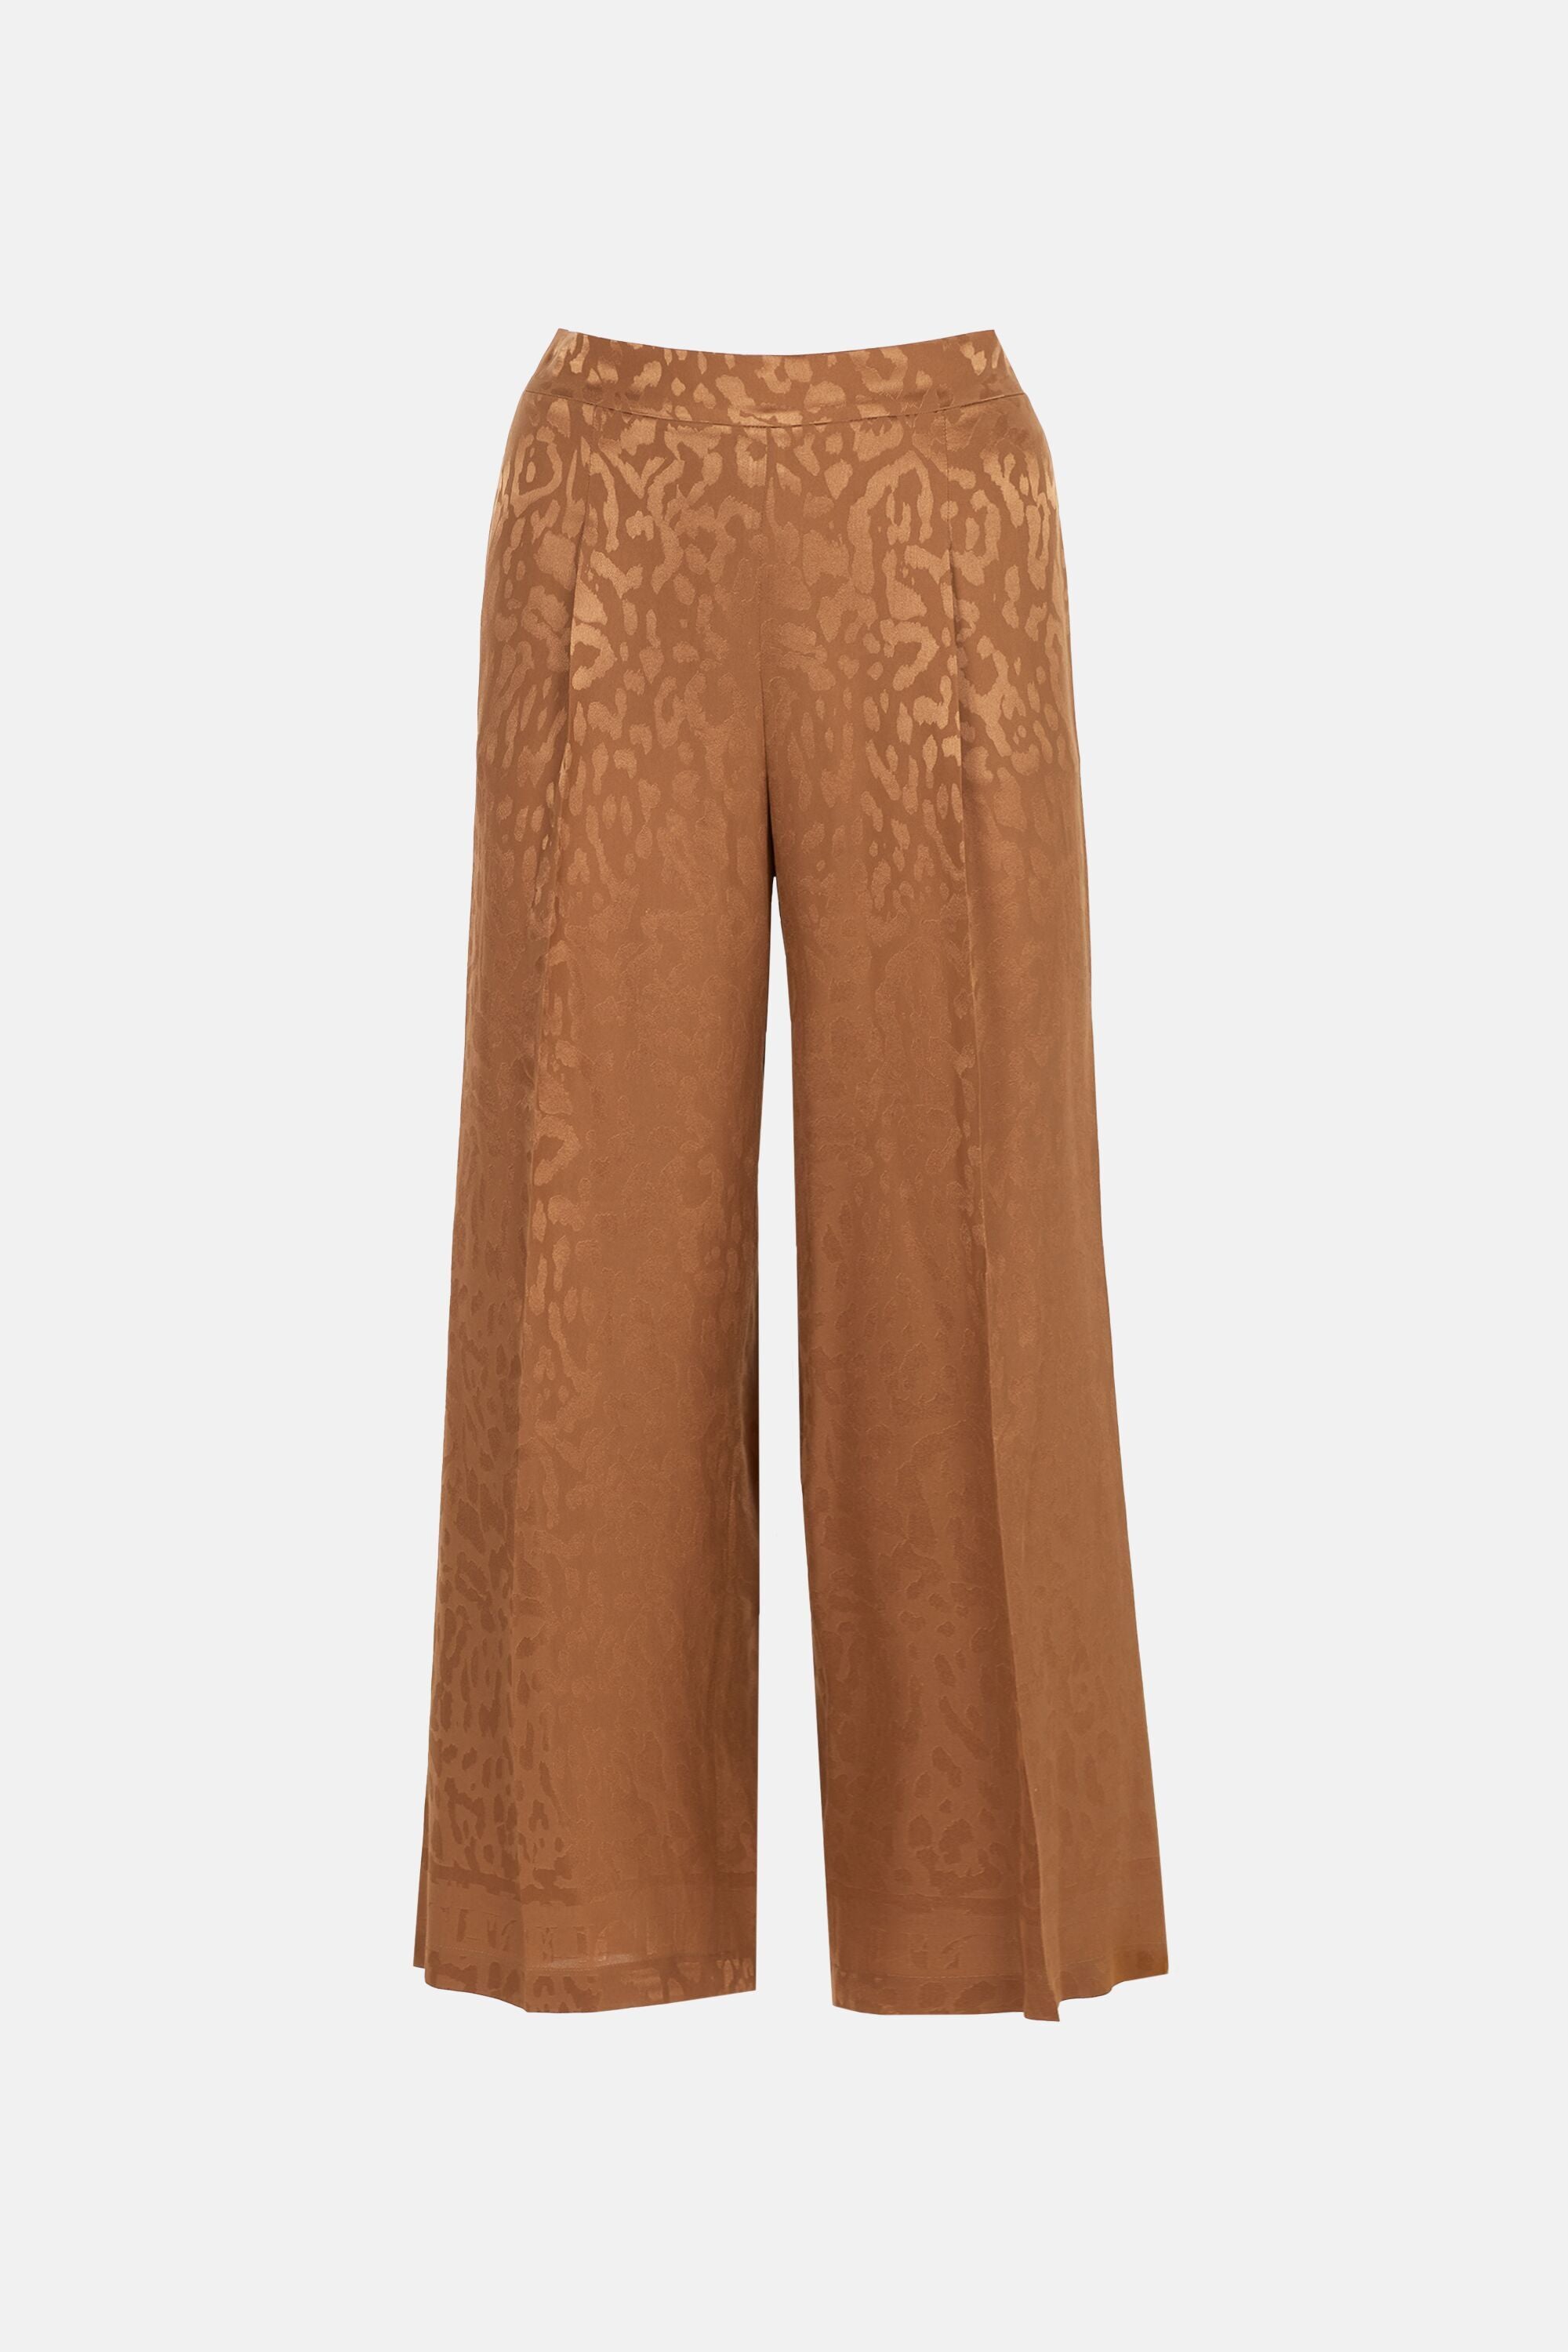 Silk jacquard pyjama style pants camel - CH Carolina Herrera 